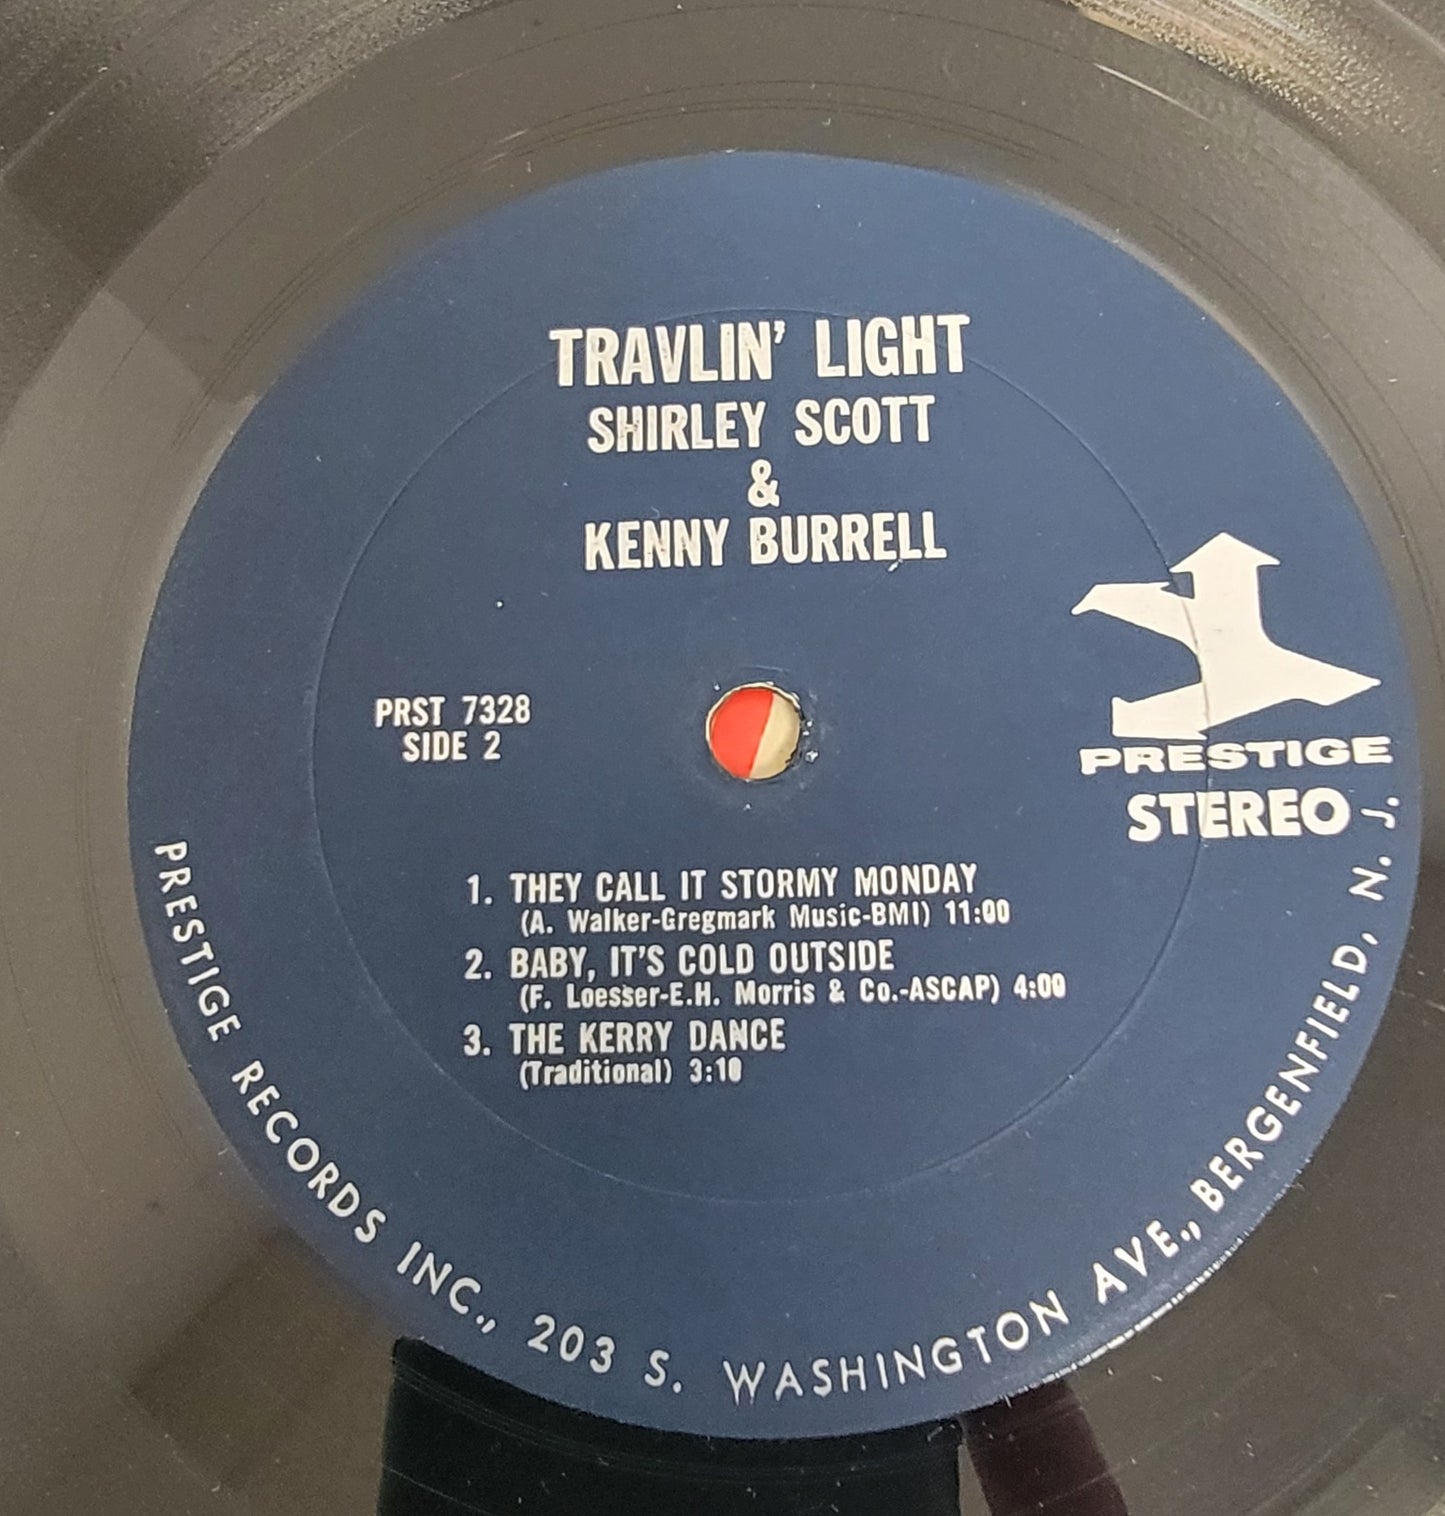 Shirley Scott & Kenny Burrell "Travelin' Light" 1964 Jazz Record Album